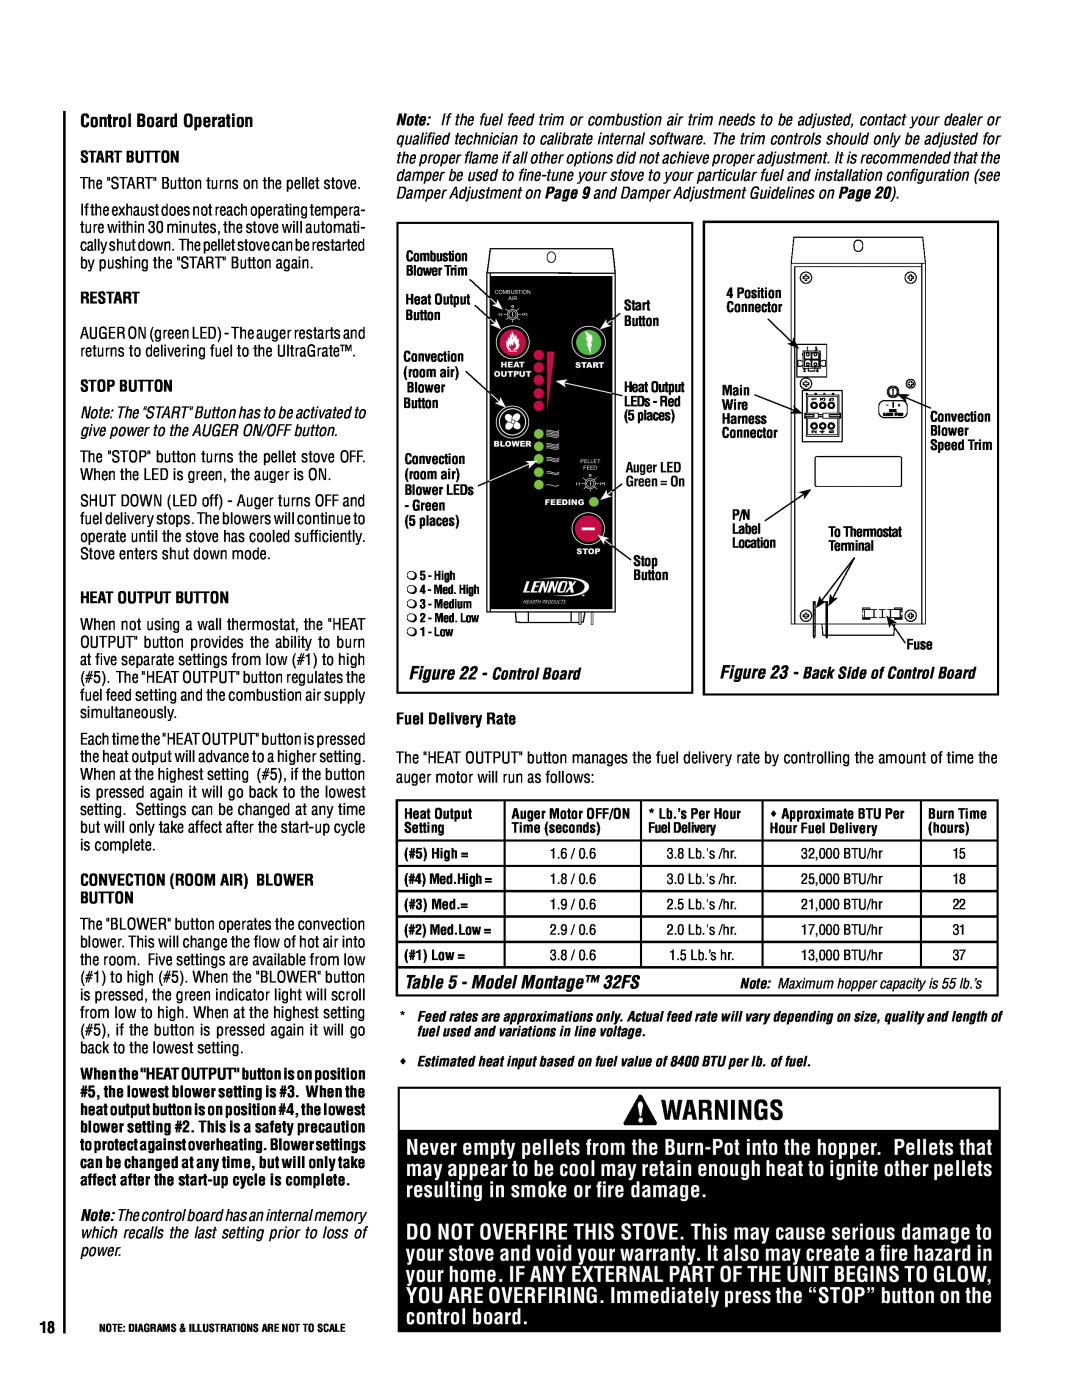 Lennox Hearth 32FS Warnings, Control Board Operation, Start Button, Restart, Stop Button, Heat Output Button 